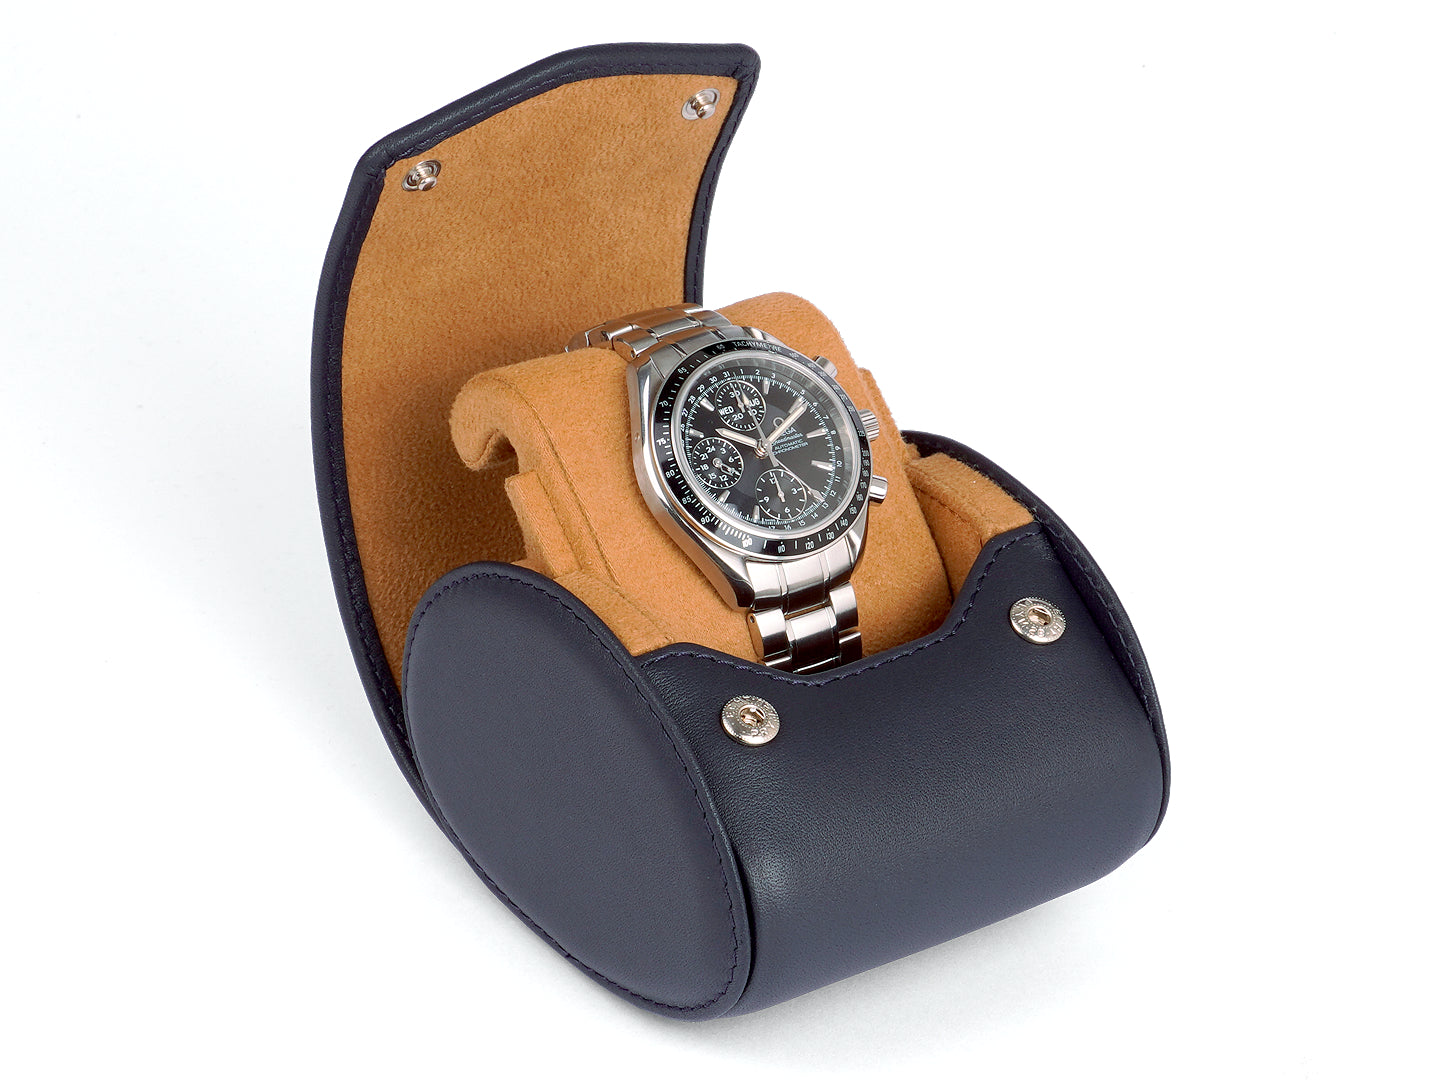 4 Slots Stylish Beige Watch Box with Plain Leather Finish